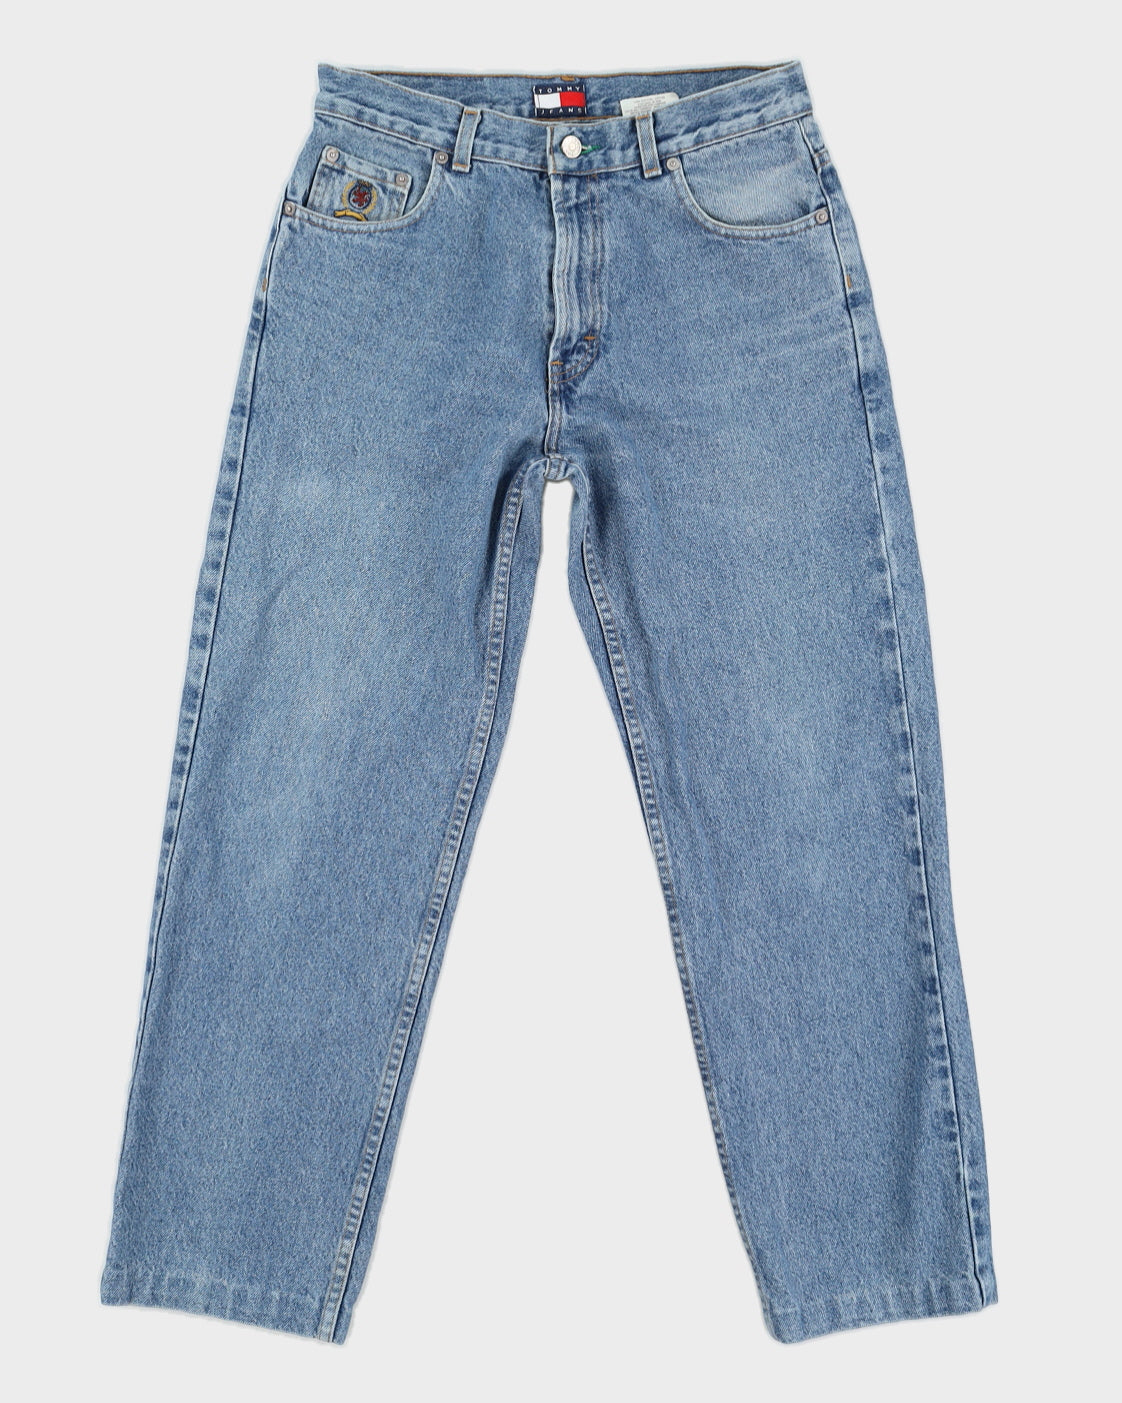 Vintage 90s Tommy Jeans Medium Wash Denim - W31 L27